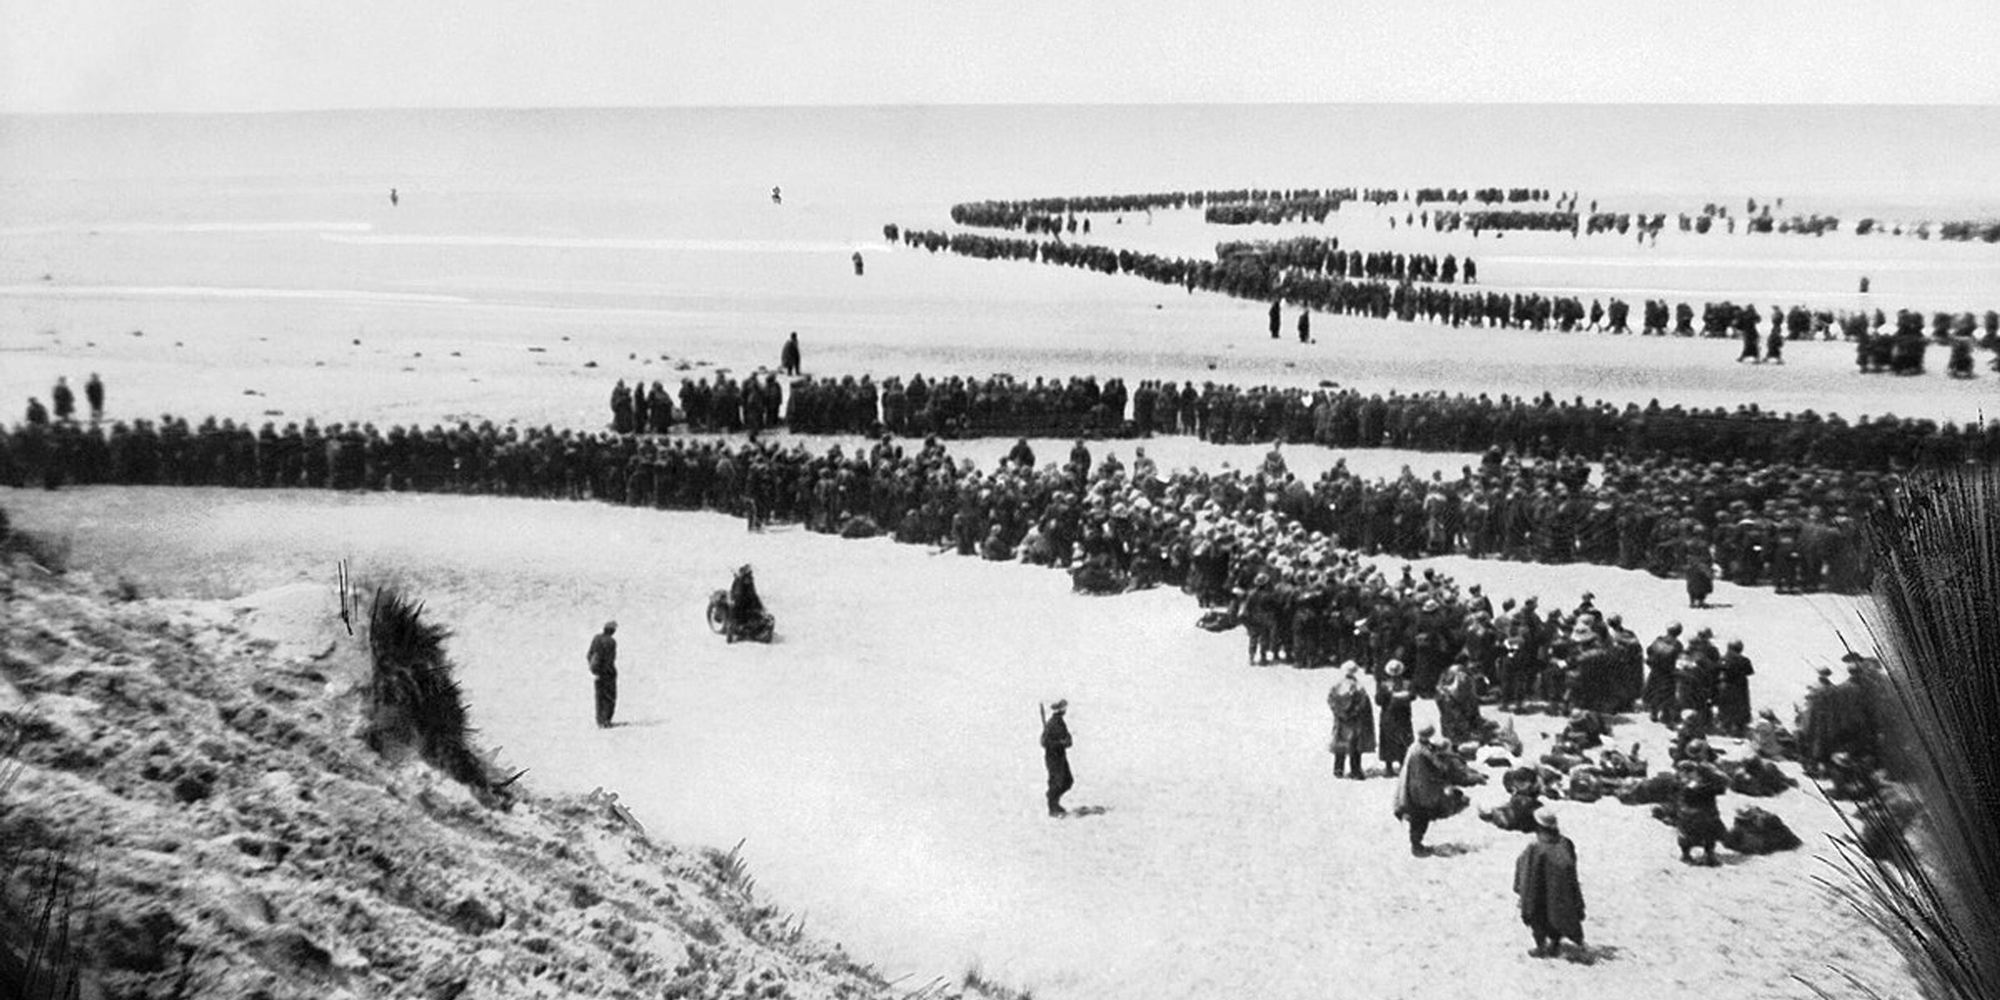 Dunkerque 1940